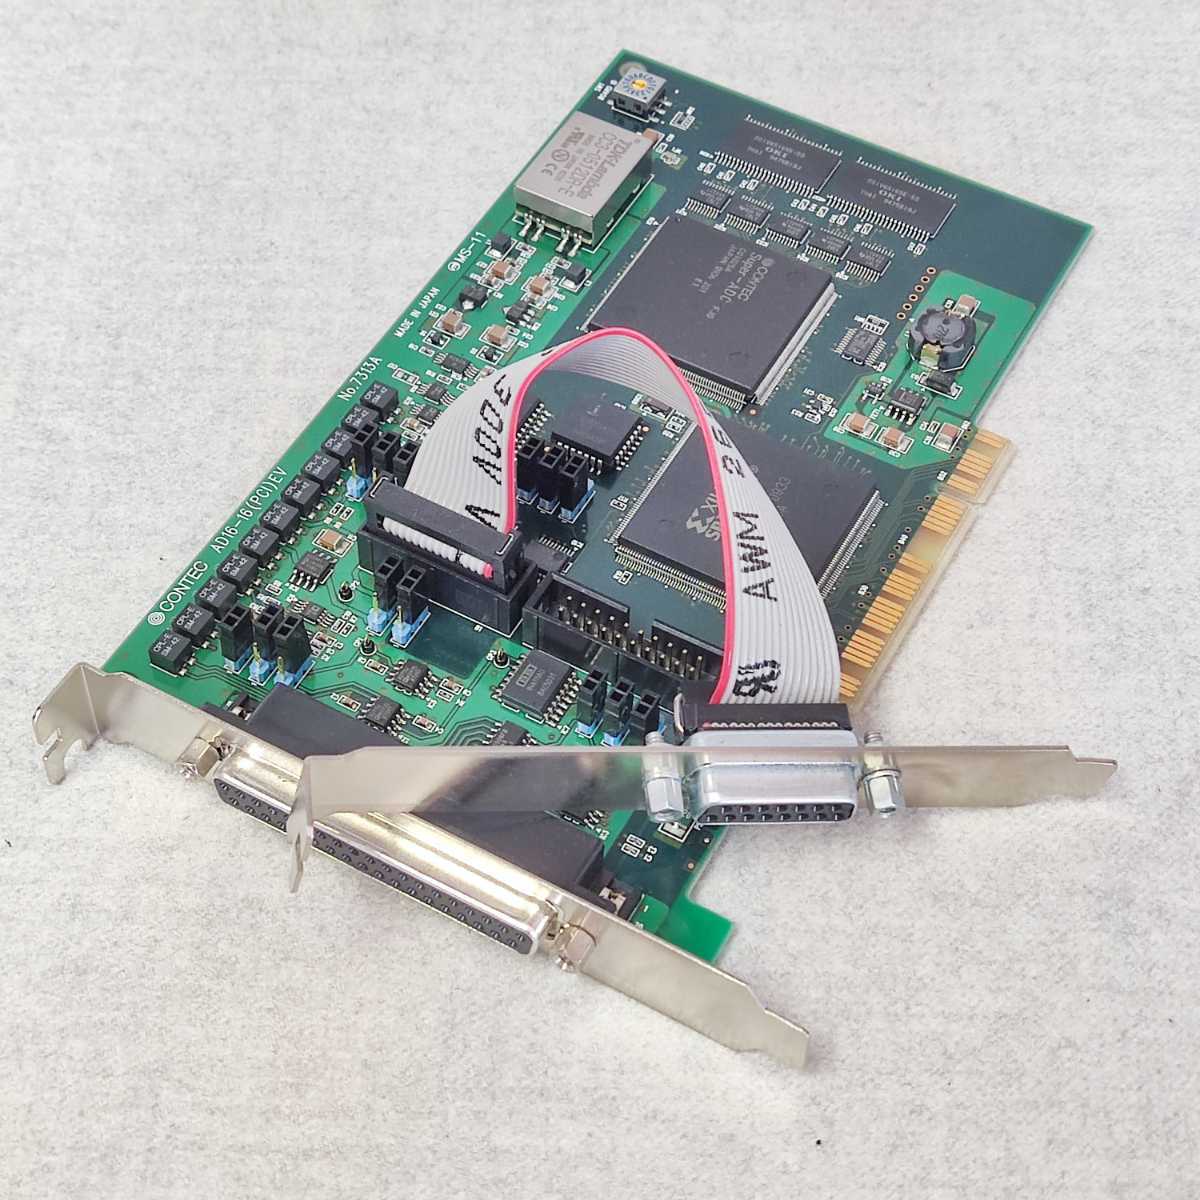 速達 送料無 ★ CONTEC 非絶縁型高精度高機能アナログ入力ボード 16ch(16bit 100ks/s) AD16-16(PCI)EV PCI 接続 ★確認済 Y202A